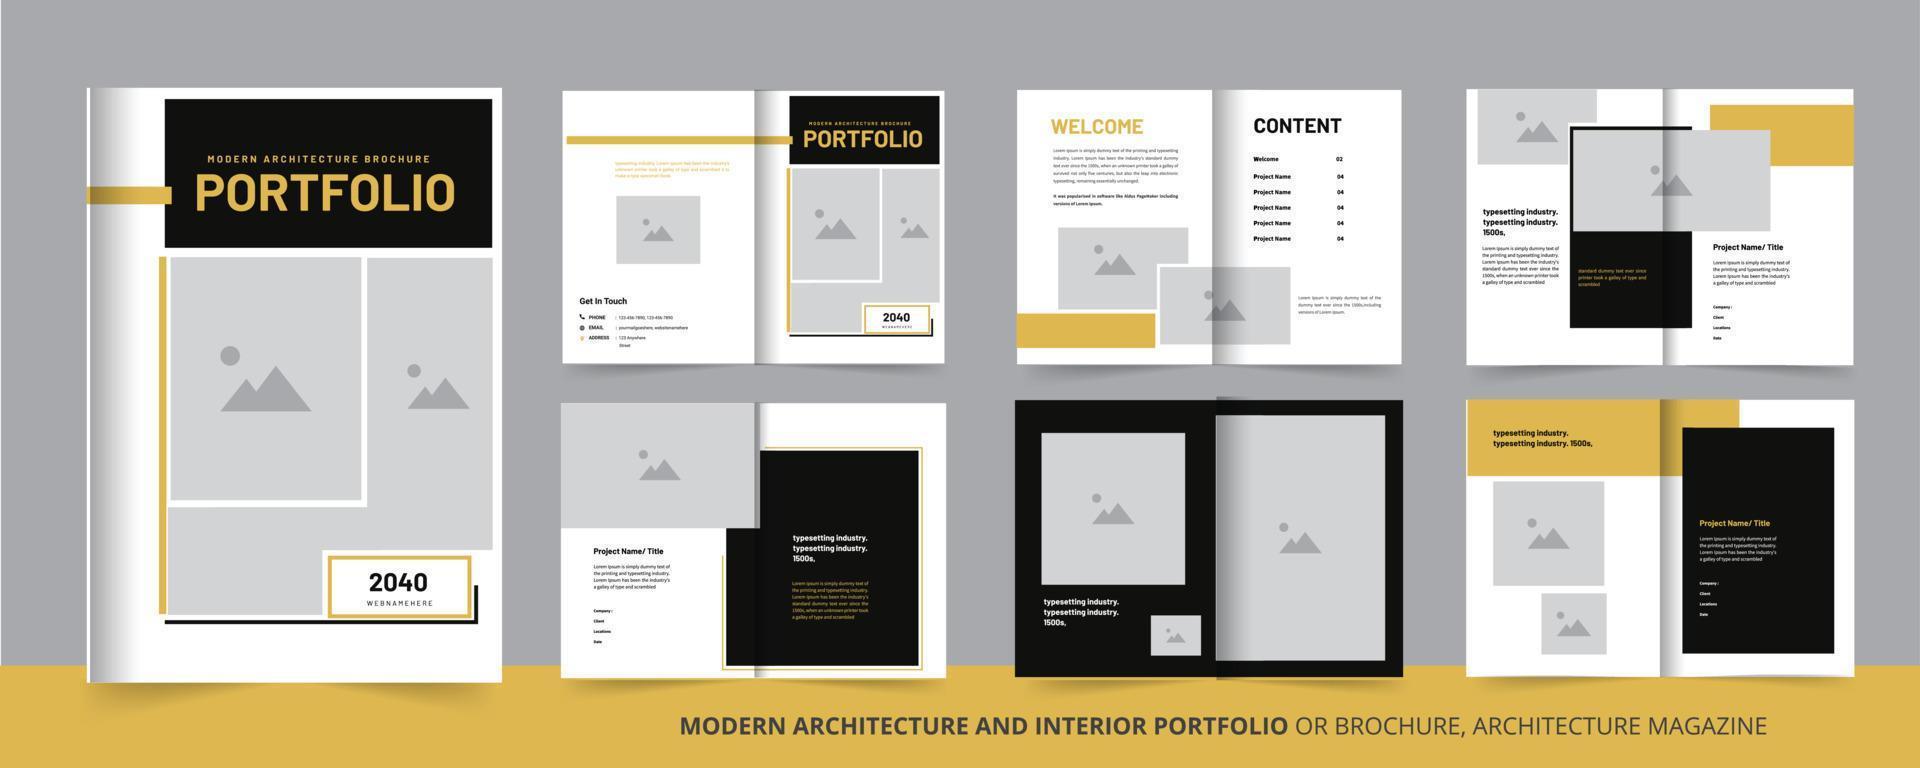 moderno arquitectura y interior portafolio o folleto, arquitectura revista vector